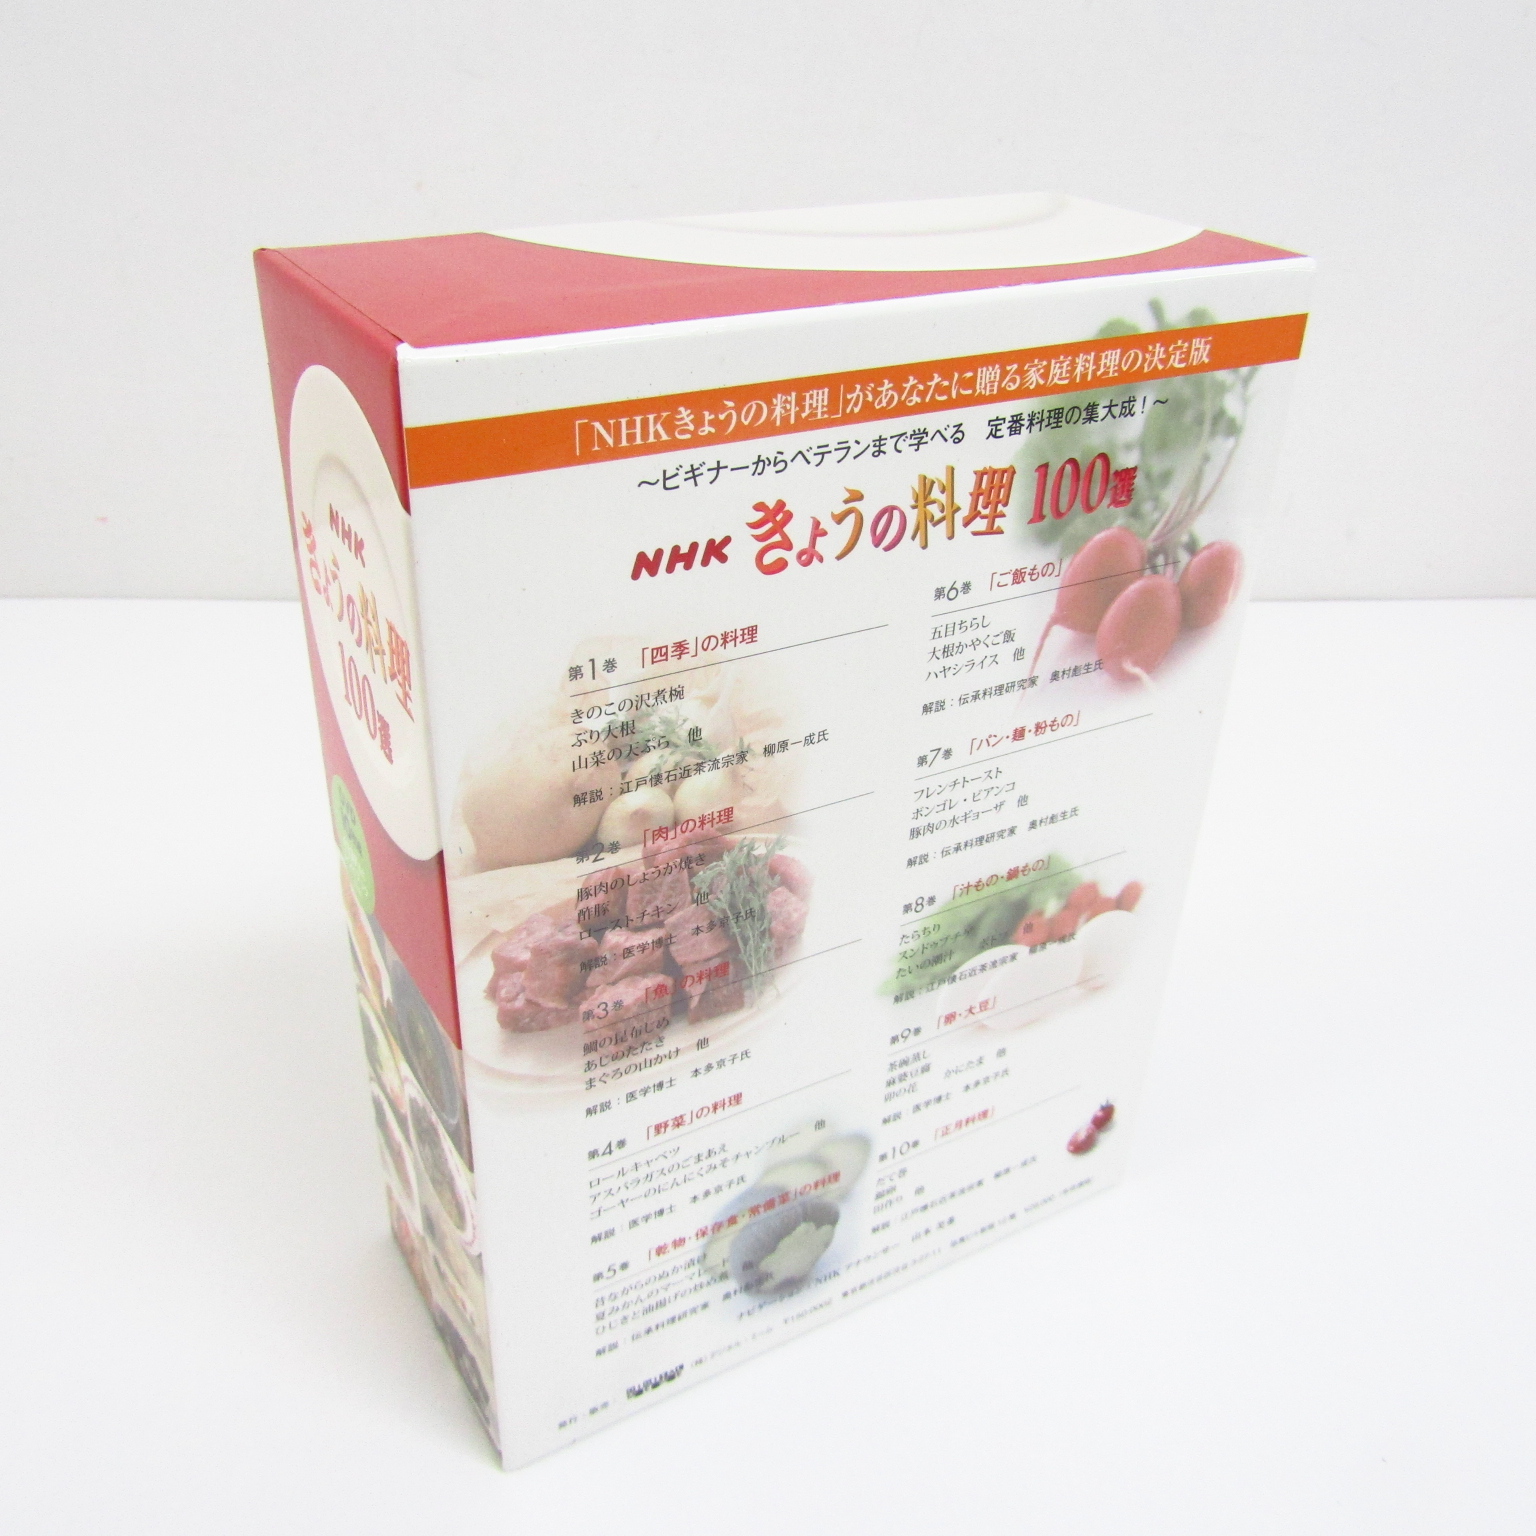 NHK.... cooking 100 selection DVD10 sheets set + recipe book *V4701